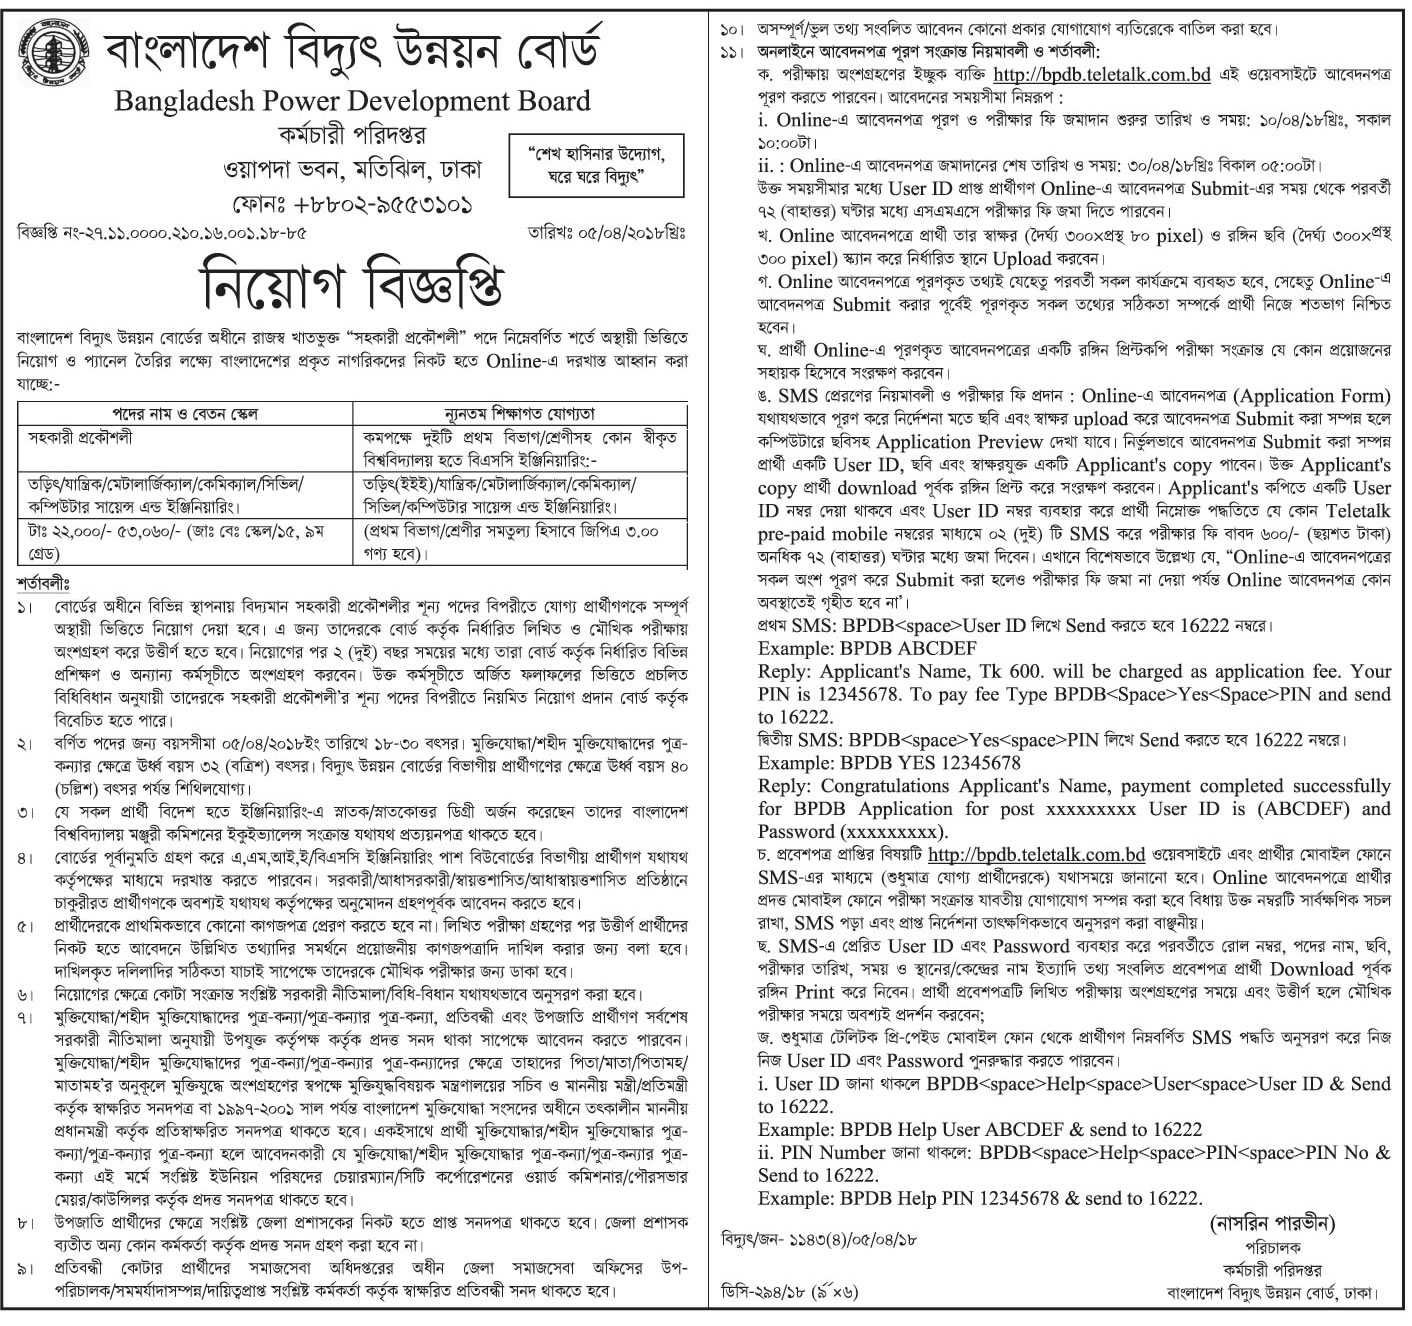 Bangladesh Power Development Board (BPDB) Job Circular 2018